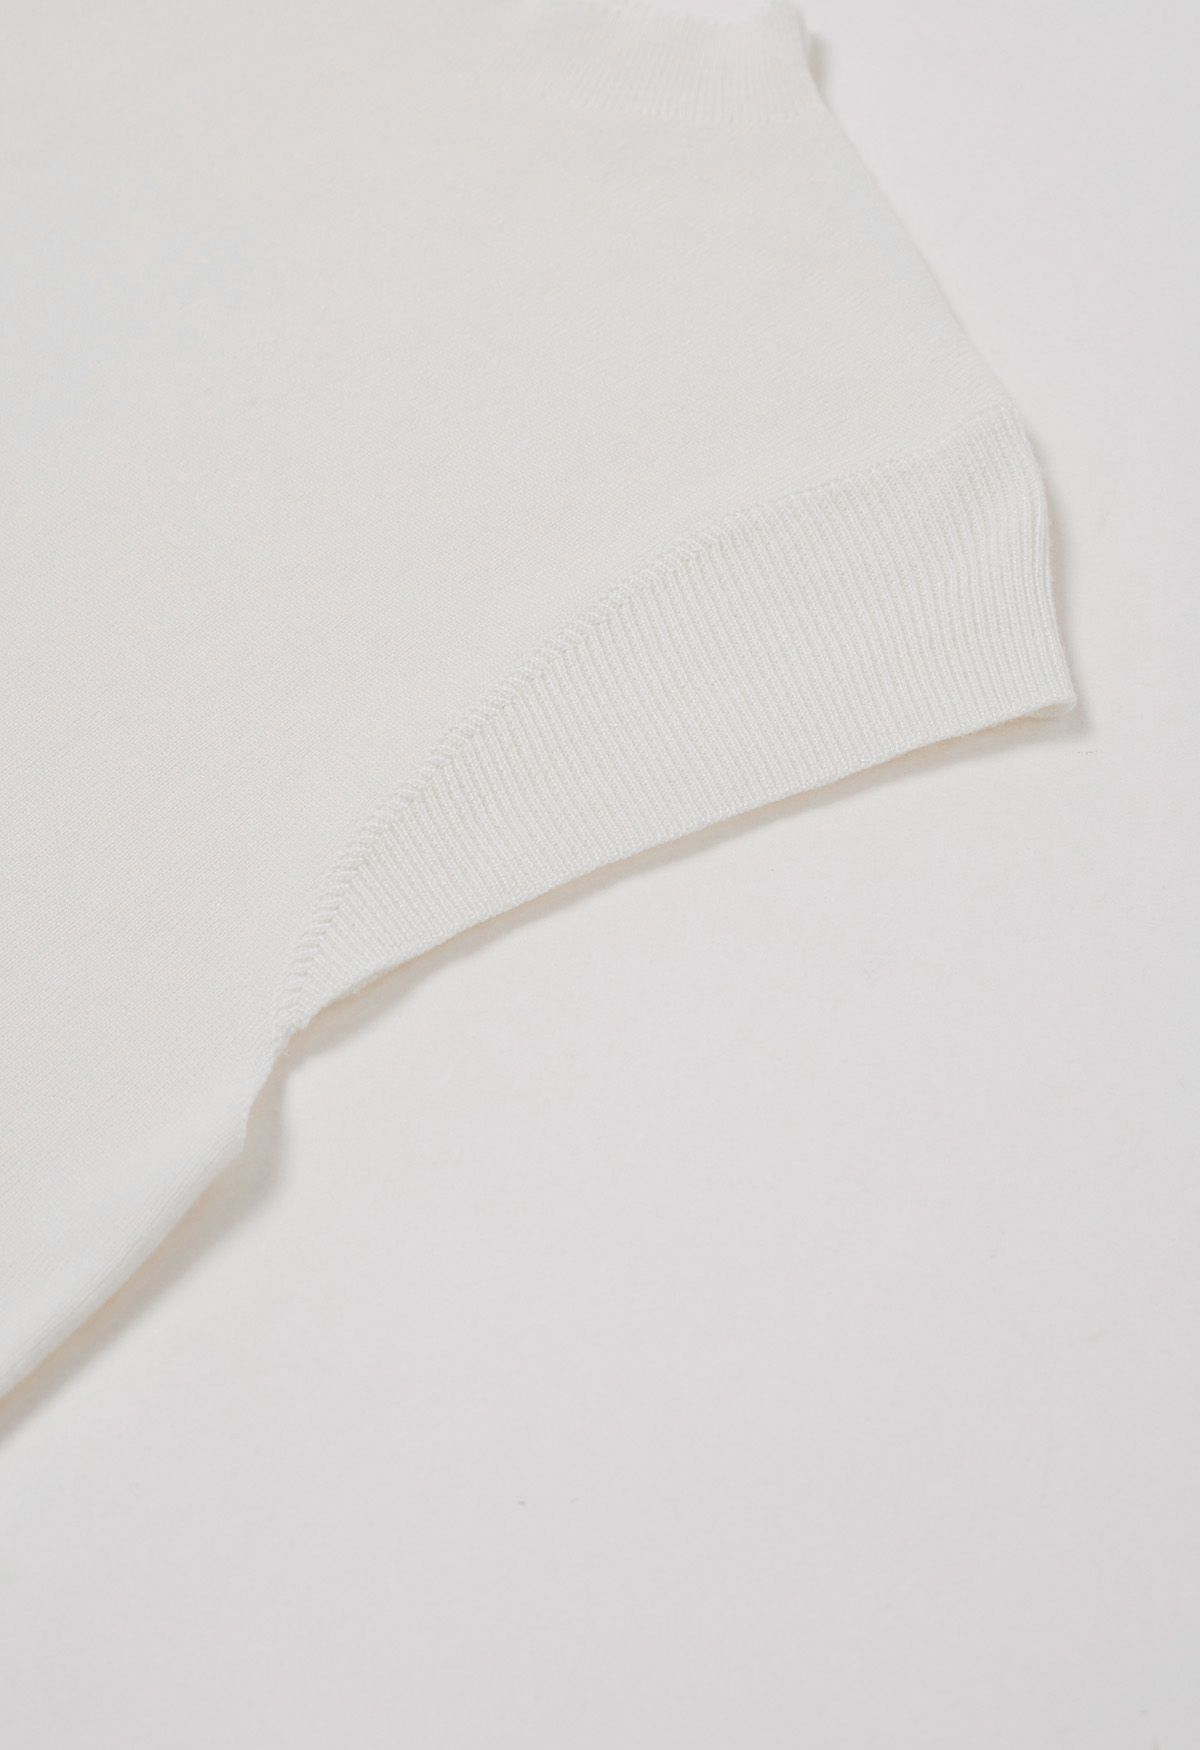 Back Drawstring Waist Mock Neck Knit Top in White